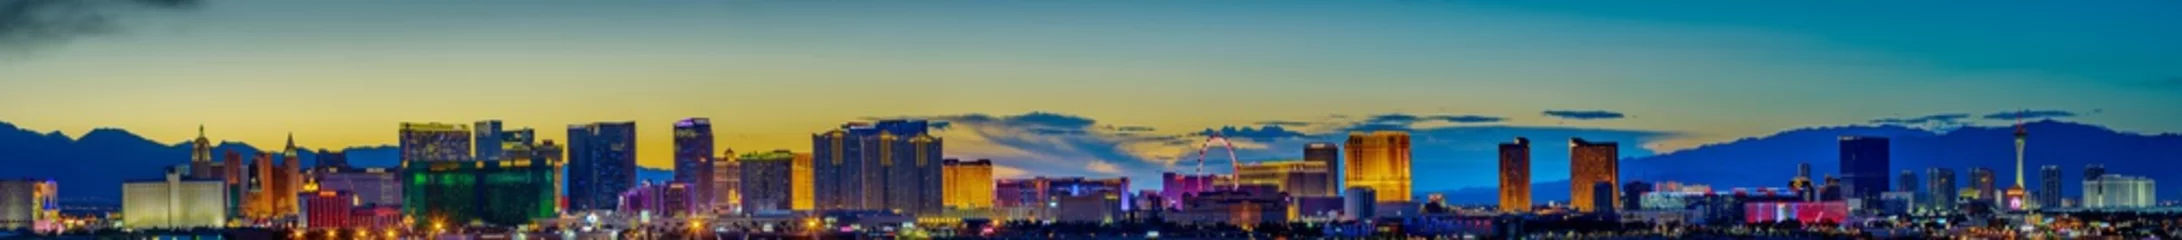 Gartenposter Skyline-Blick bei Sonnenuntergang des berühmten Las Vegas Strip in Weltklasse-Hotels und Casinos, NV © yooranpark